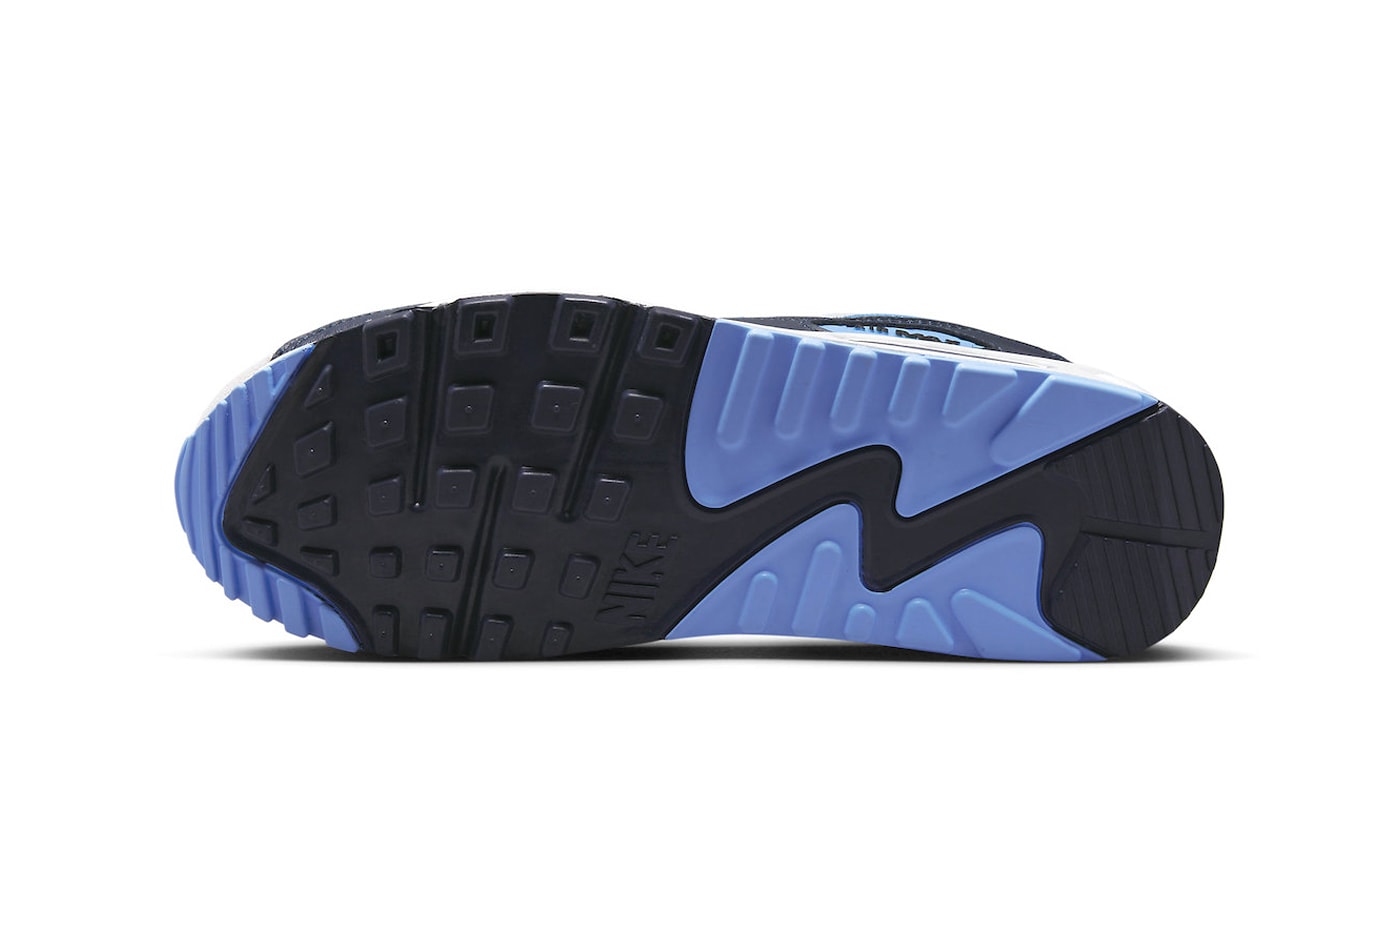 Nike Air Max 90 UNC spring 2023 white university blue dark obsidian 130 USD release info date price